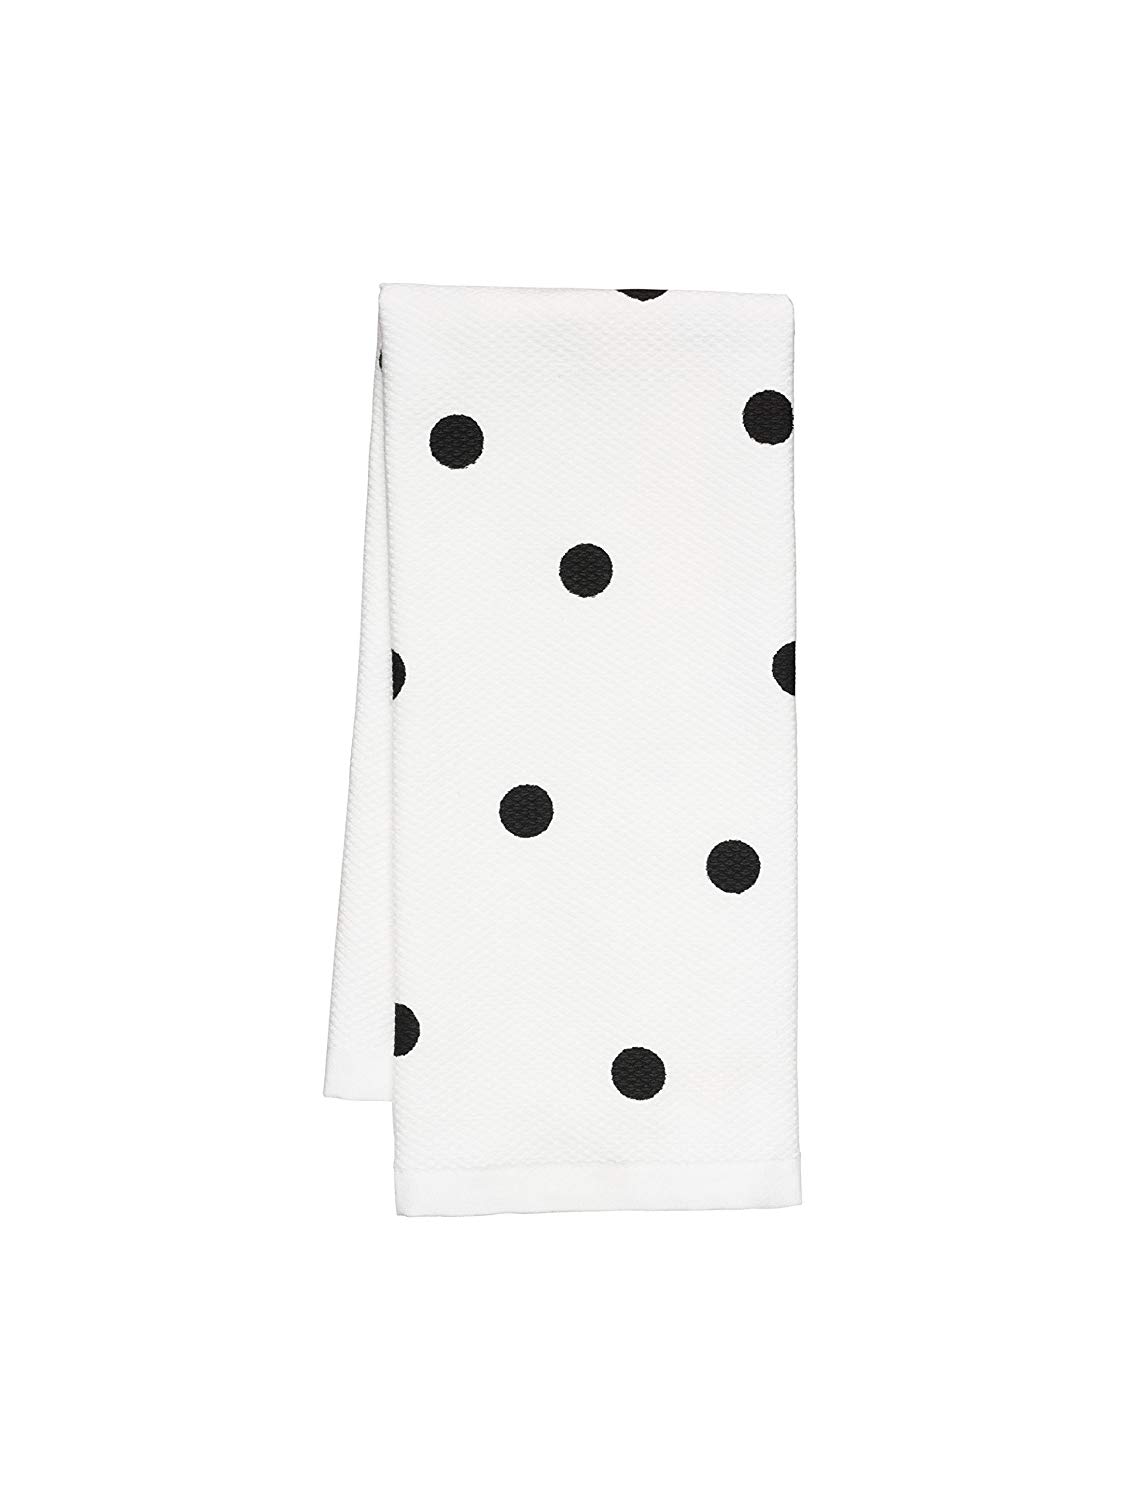 Kate Spade New York Cherry Dot Kitchen Towel, Oven Mitt Pot Holder 4-Pack Set, - White, Red, Blue